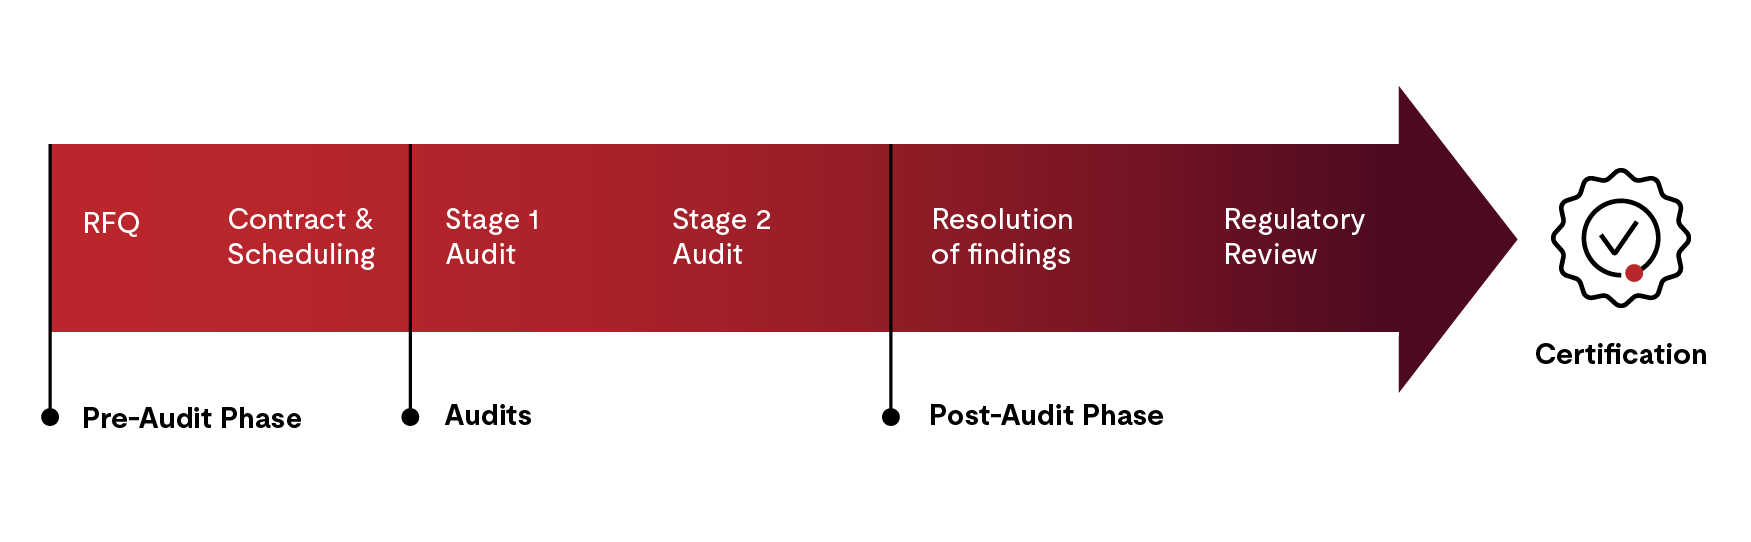 Medical Device Single Audit Program (MDSAP) process.